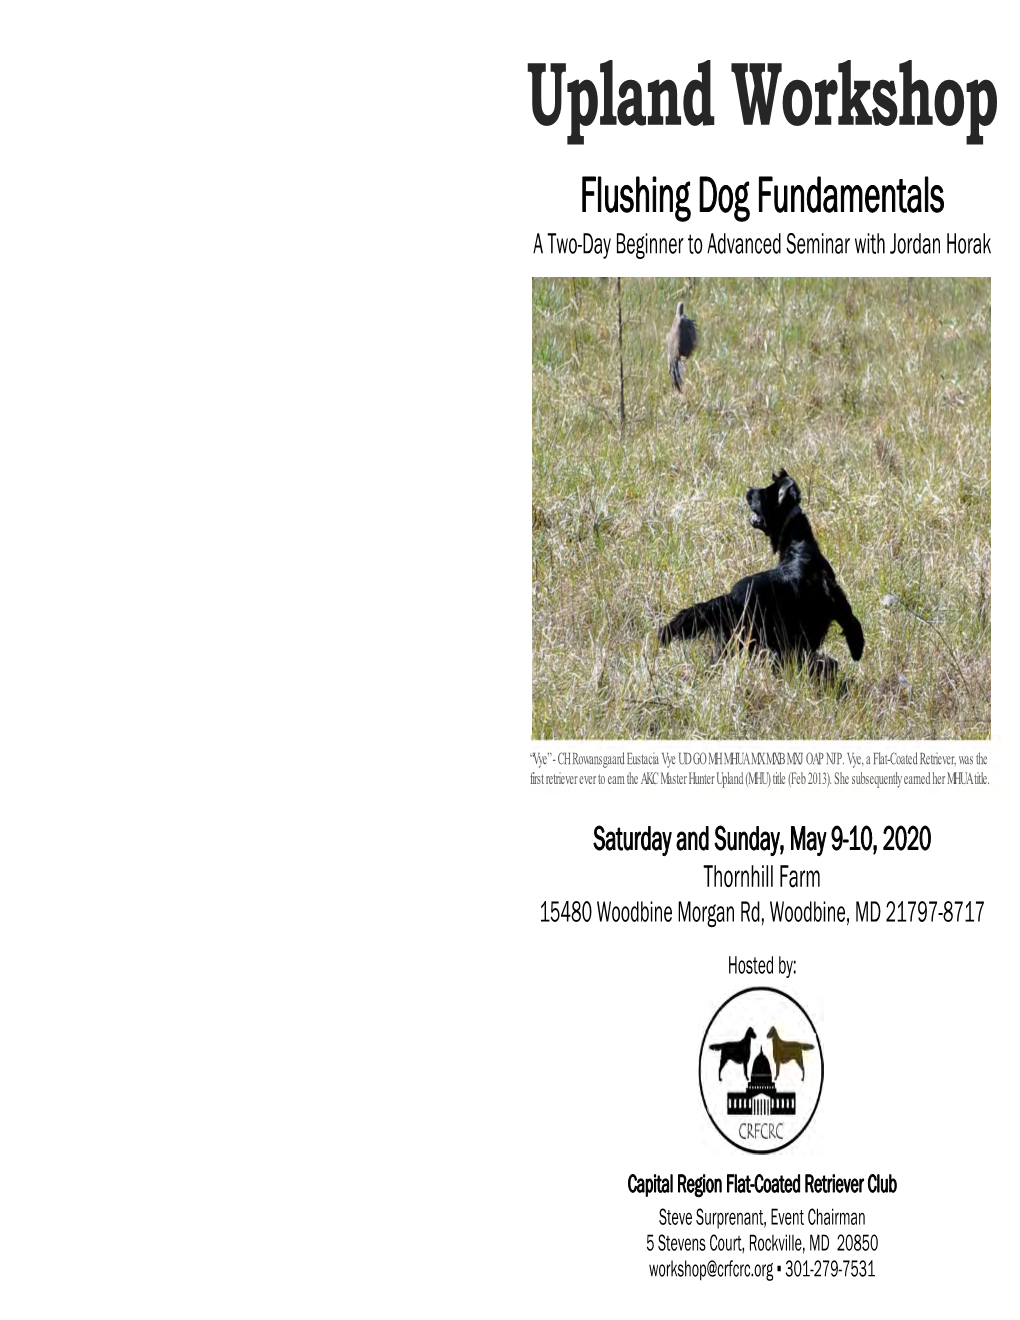 Upland Workshop Flushing Dog Fundamentals a Two-Day Beginner to Advanced Seminar with Jordan Horak